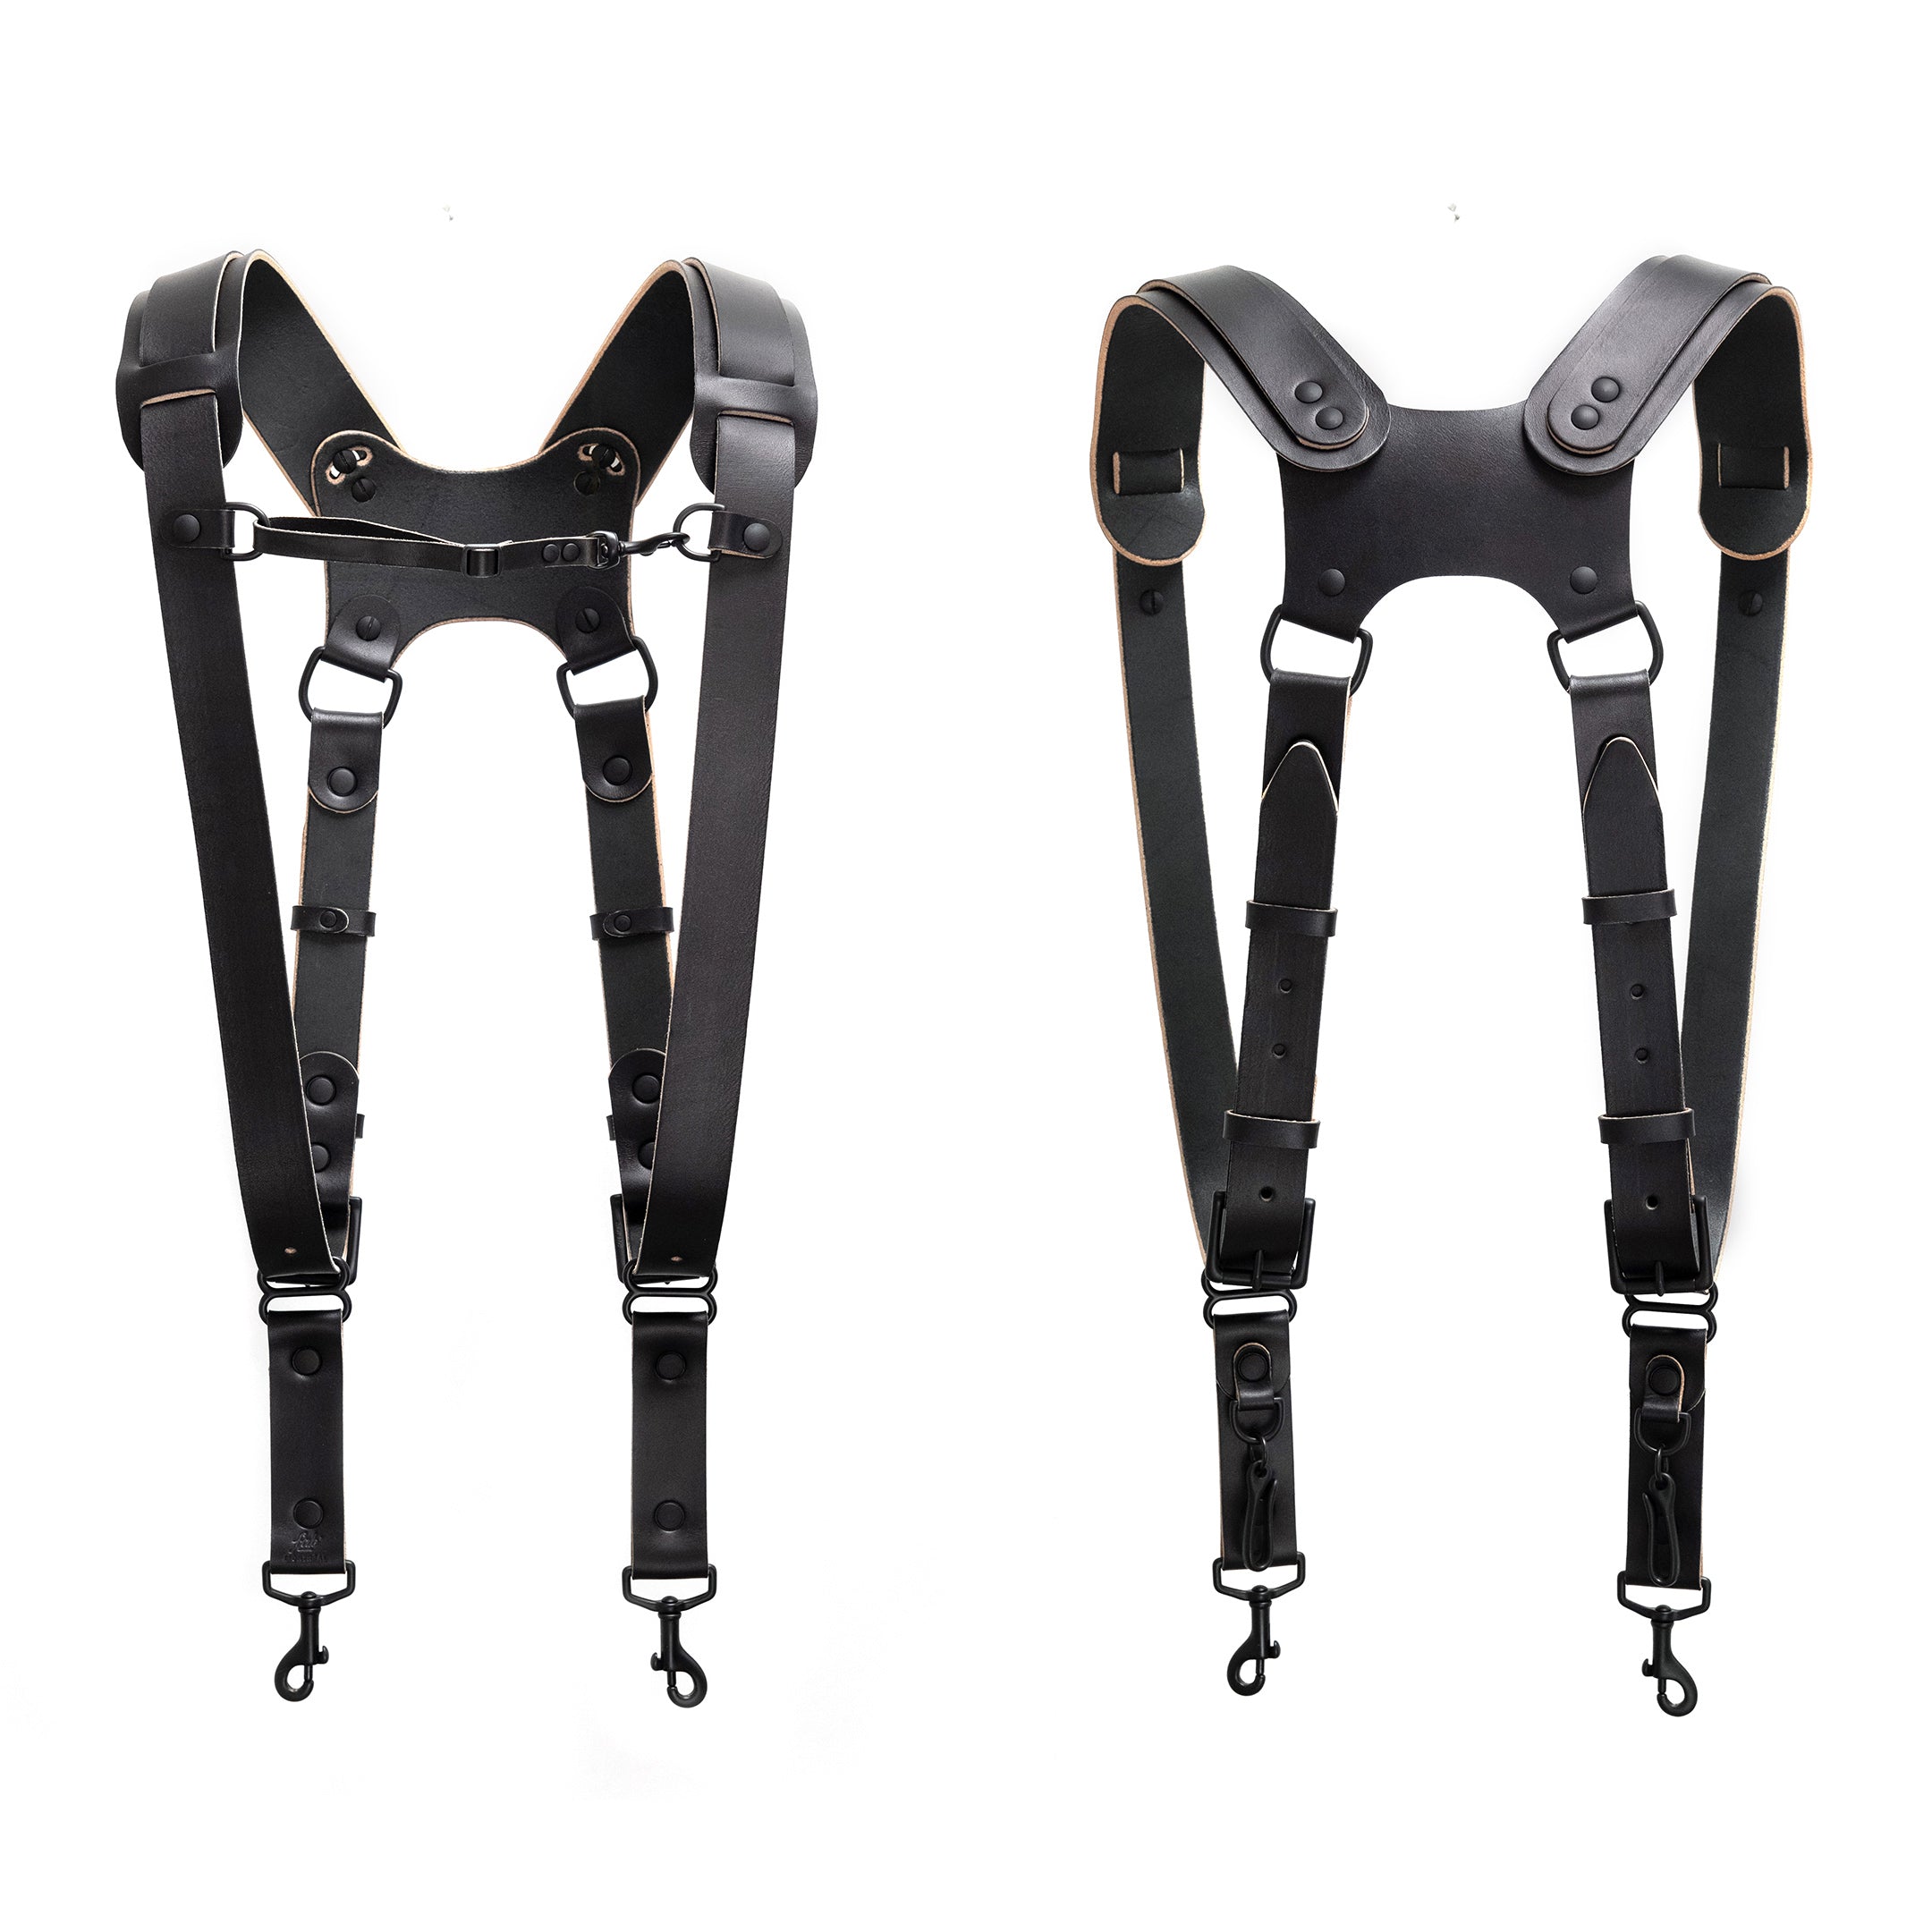 Fab' F22 harness - Black leather - Size XS